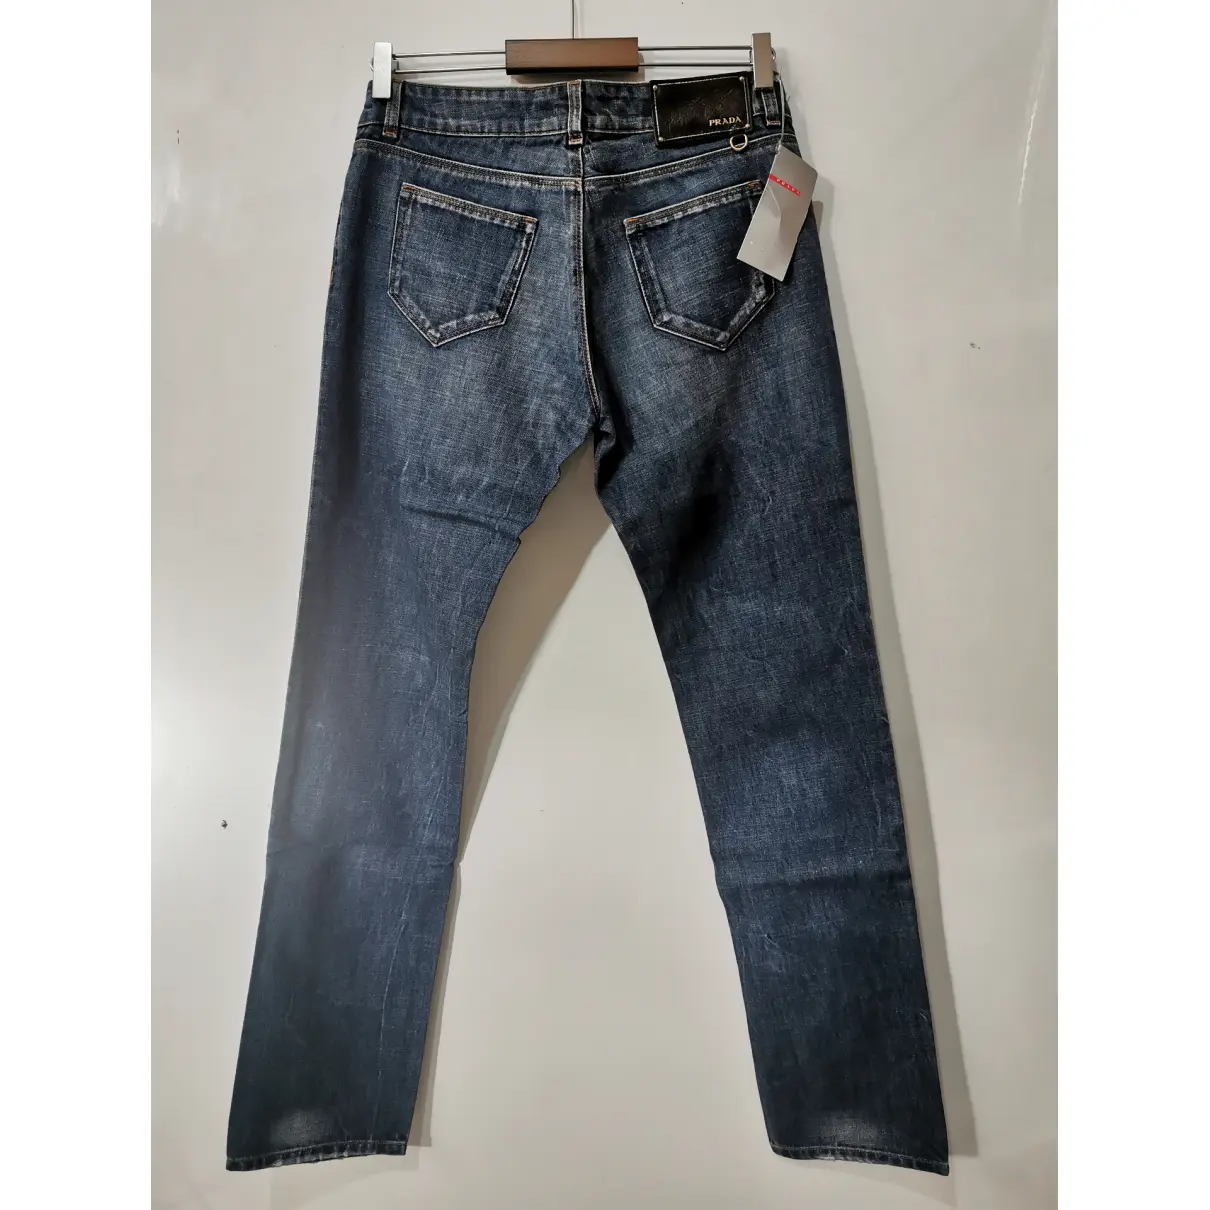 Buy Prada Blue Cotton Jeans online